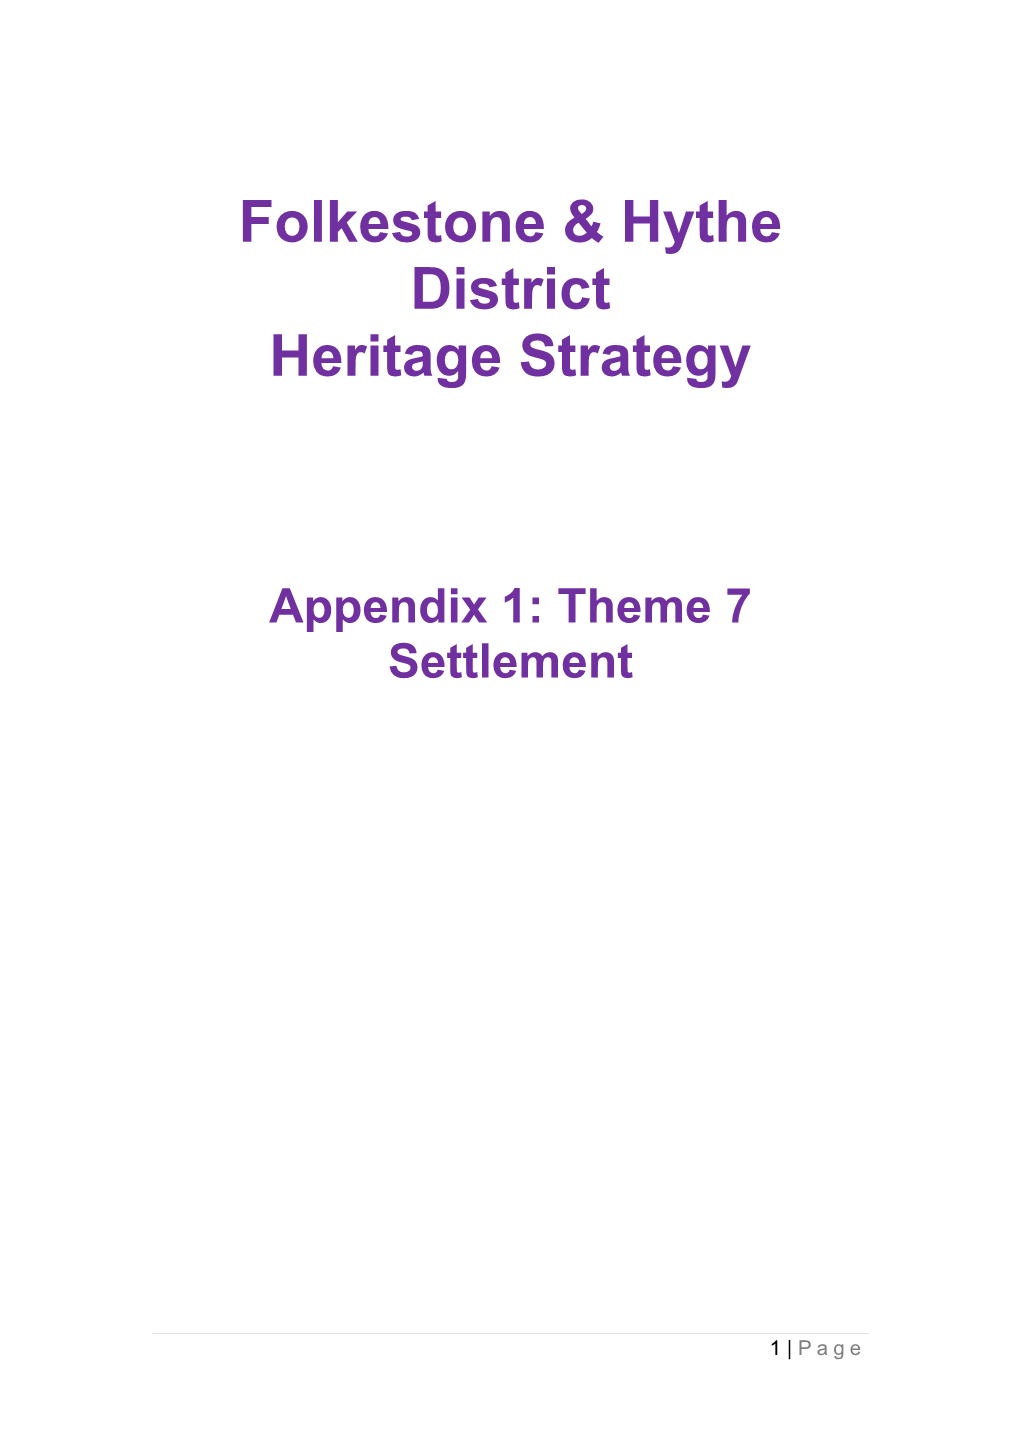 Appendix 1, Theme 7 – Settlement